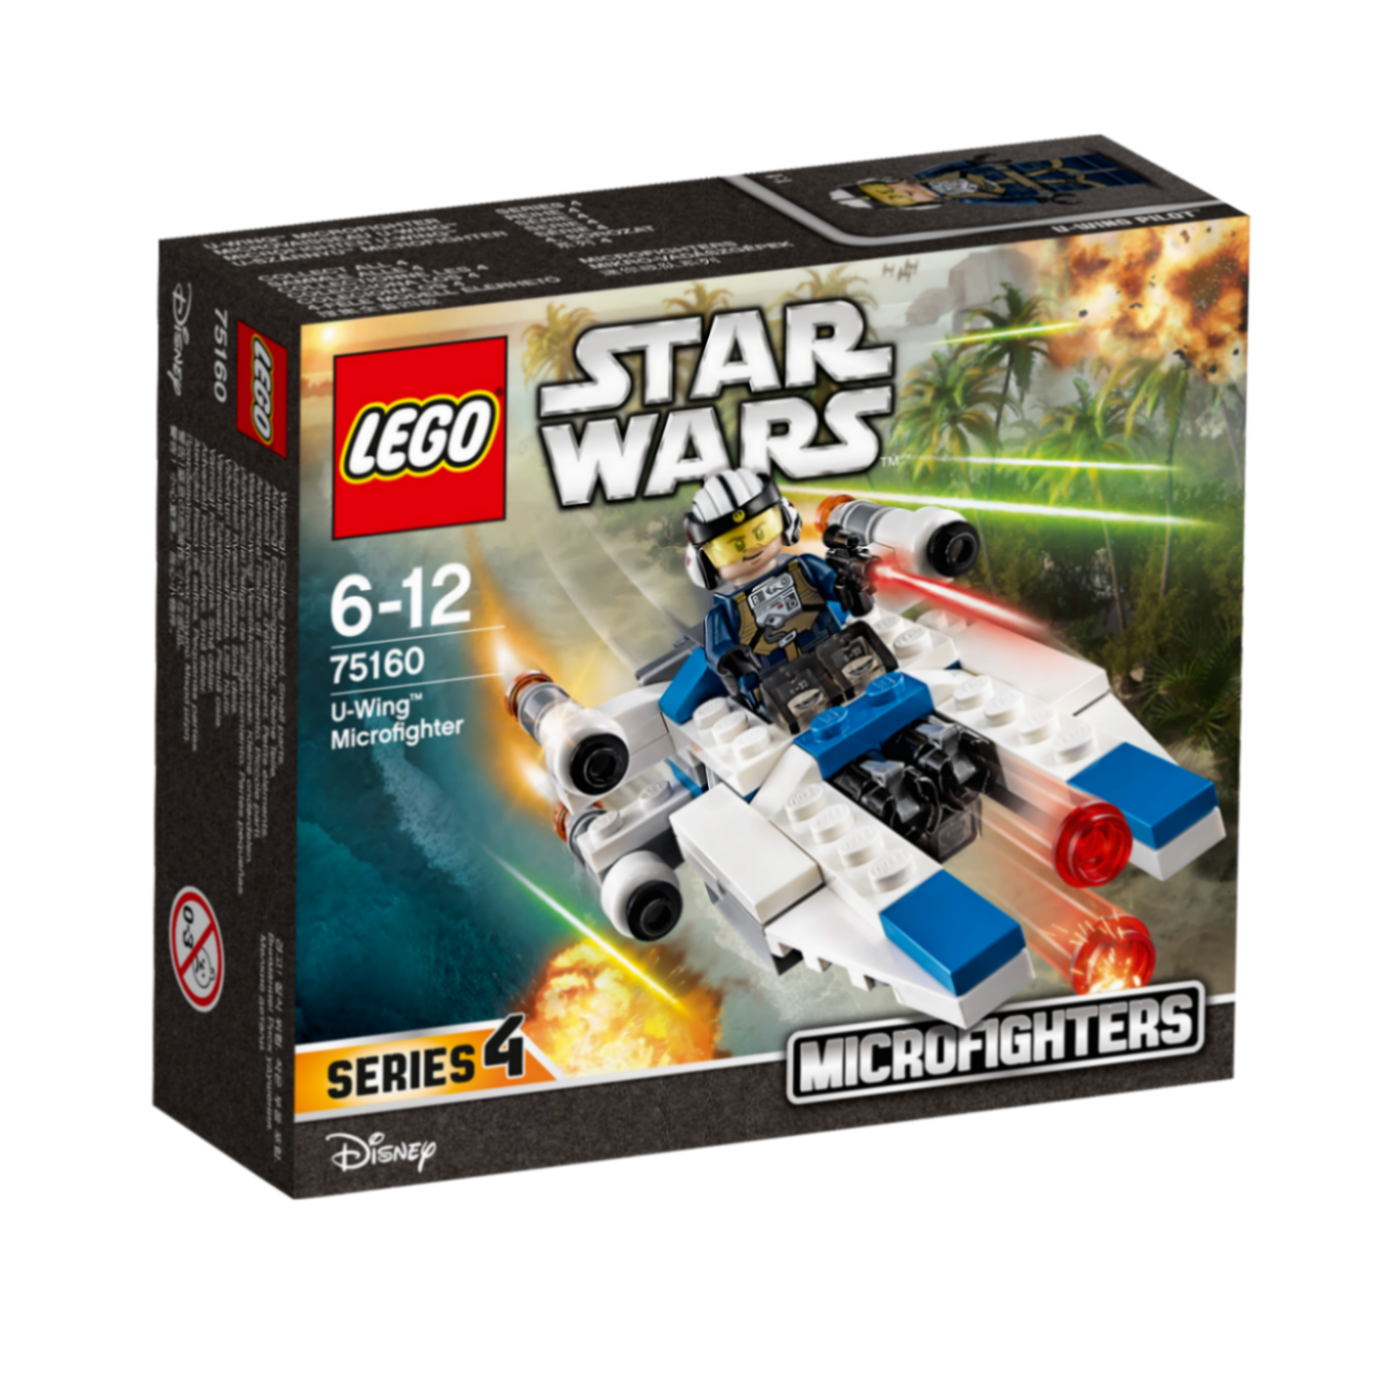 U-Wing Microfighter, LEGO Star Wars